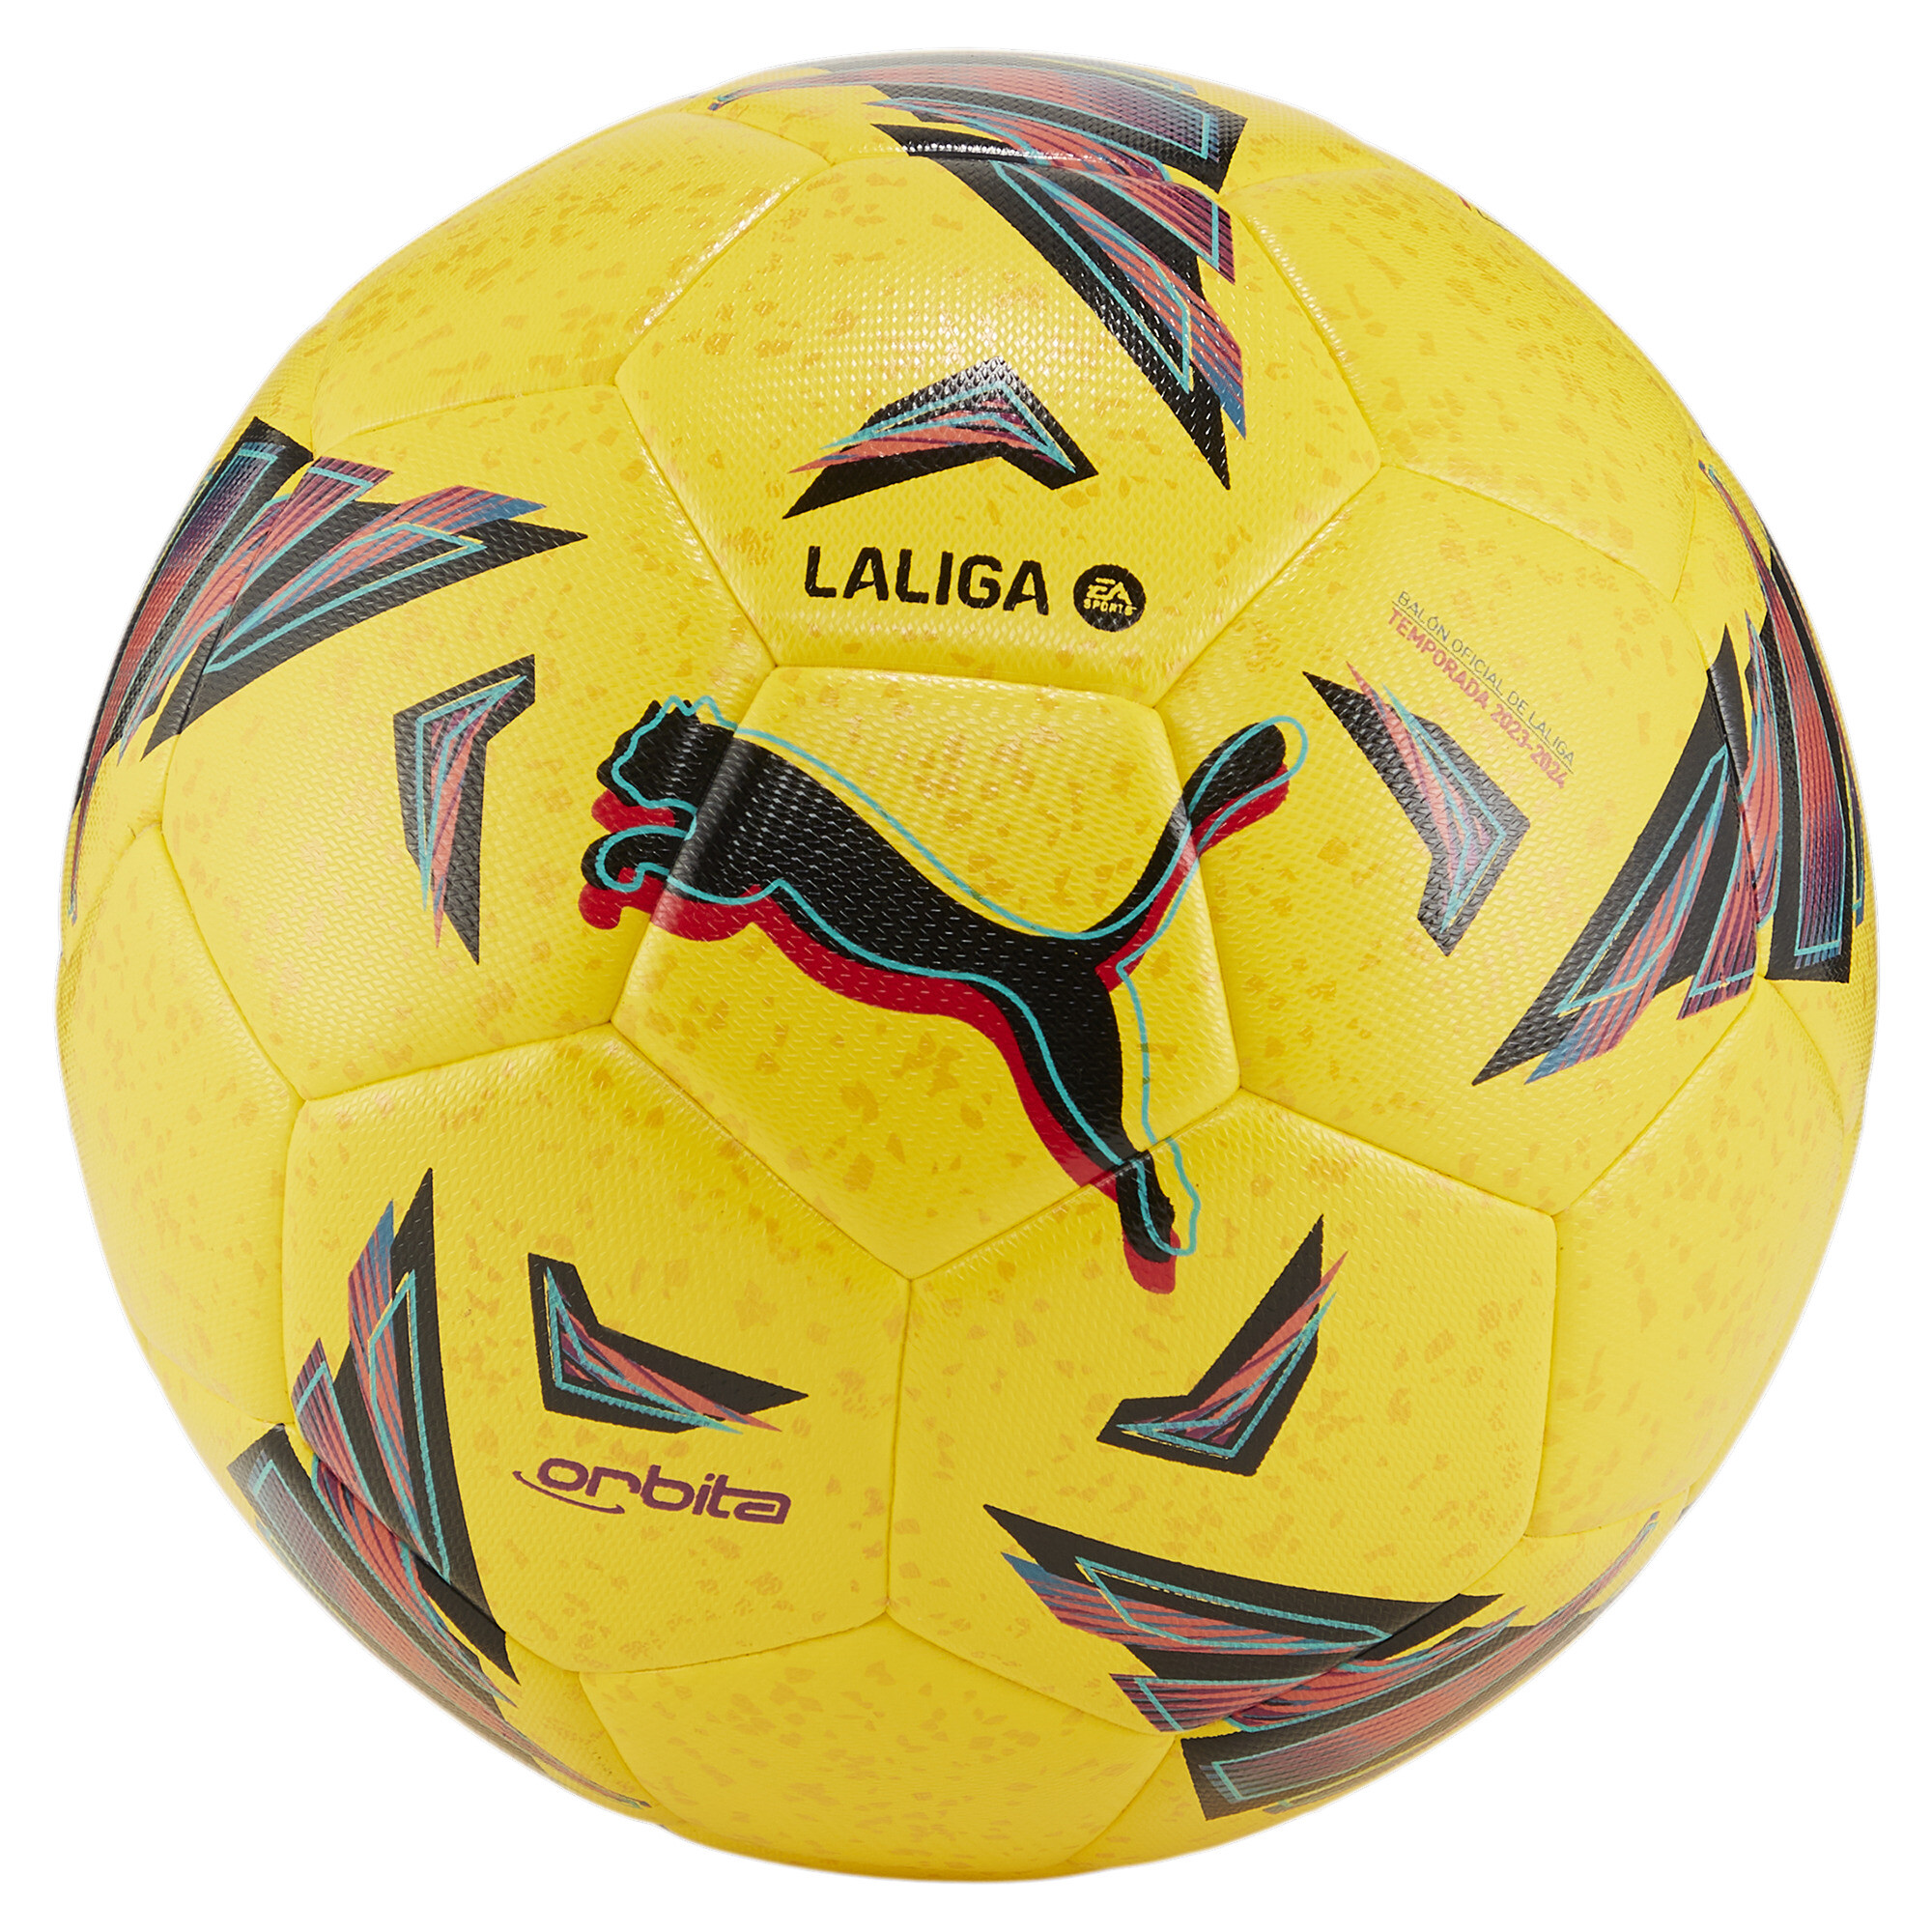 Puma Orbita La Liga Hybrid Training Football, Yellow, Size 5, Accessories